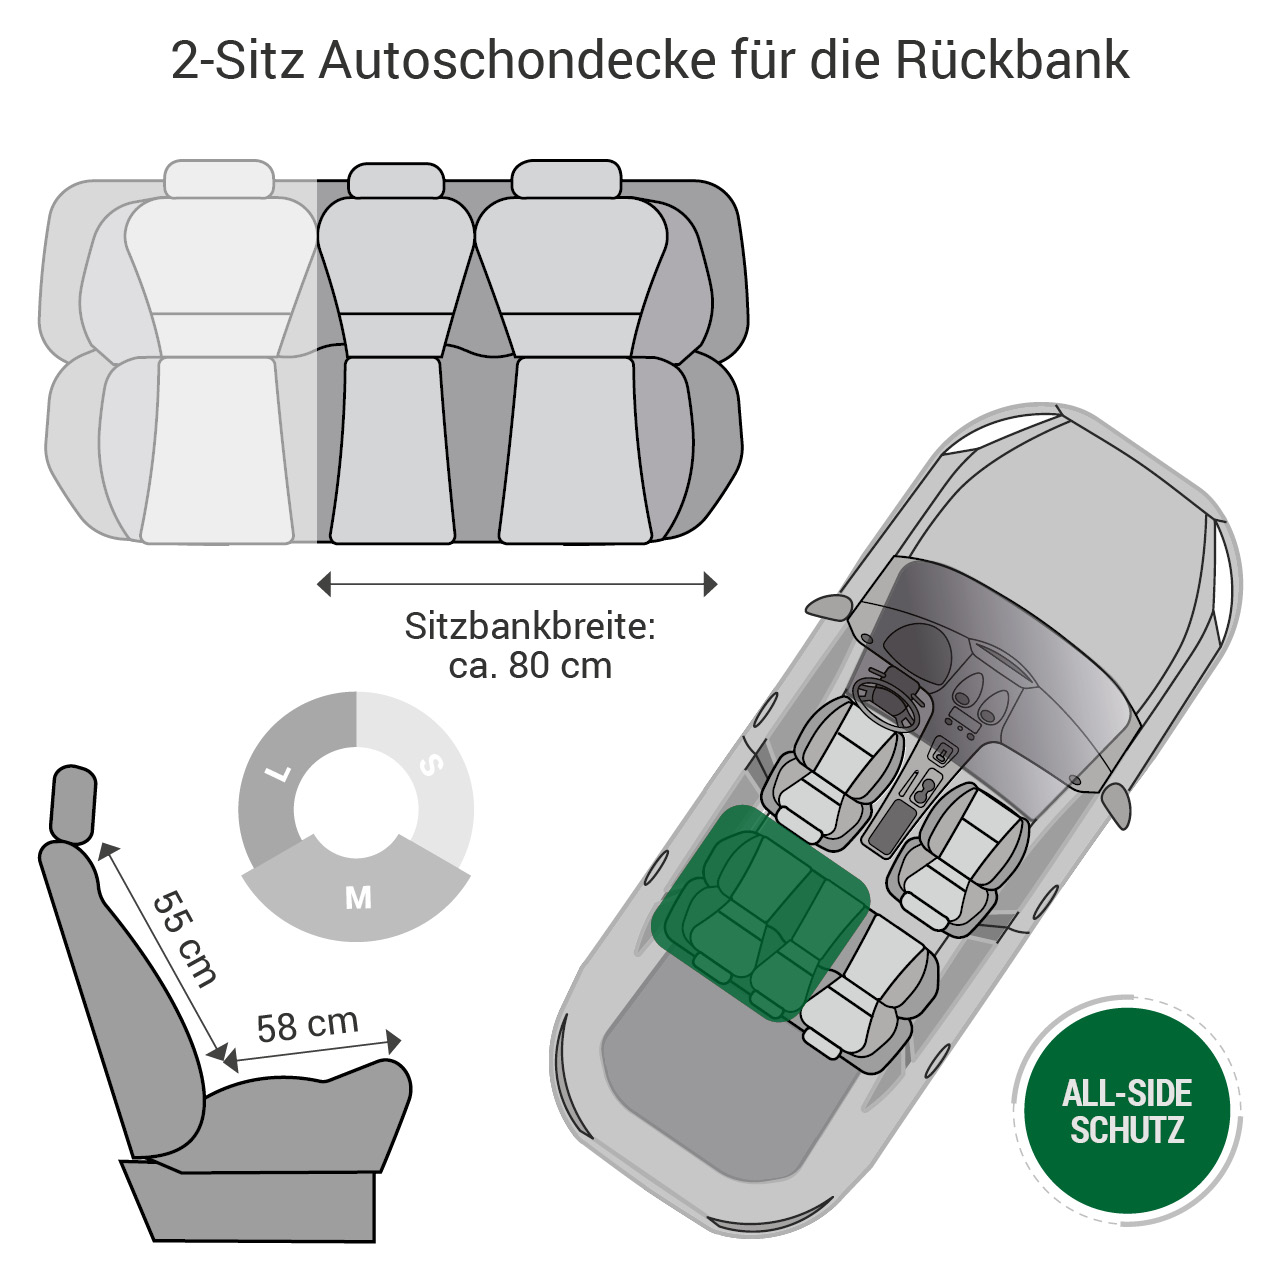 Doctor Bark - Autoschondecke für Hunde - Rückbank 2-Sitz Gr. M - grau